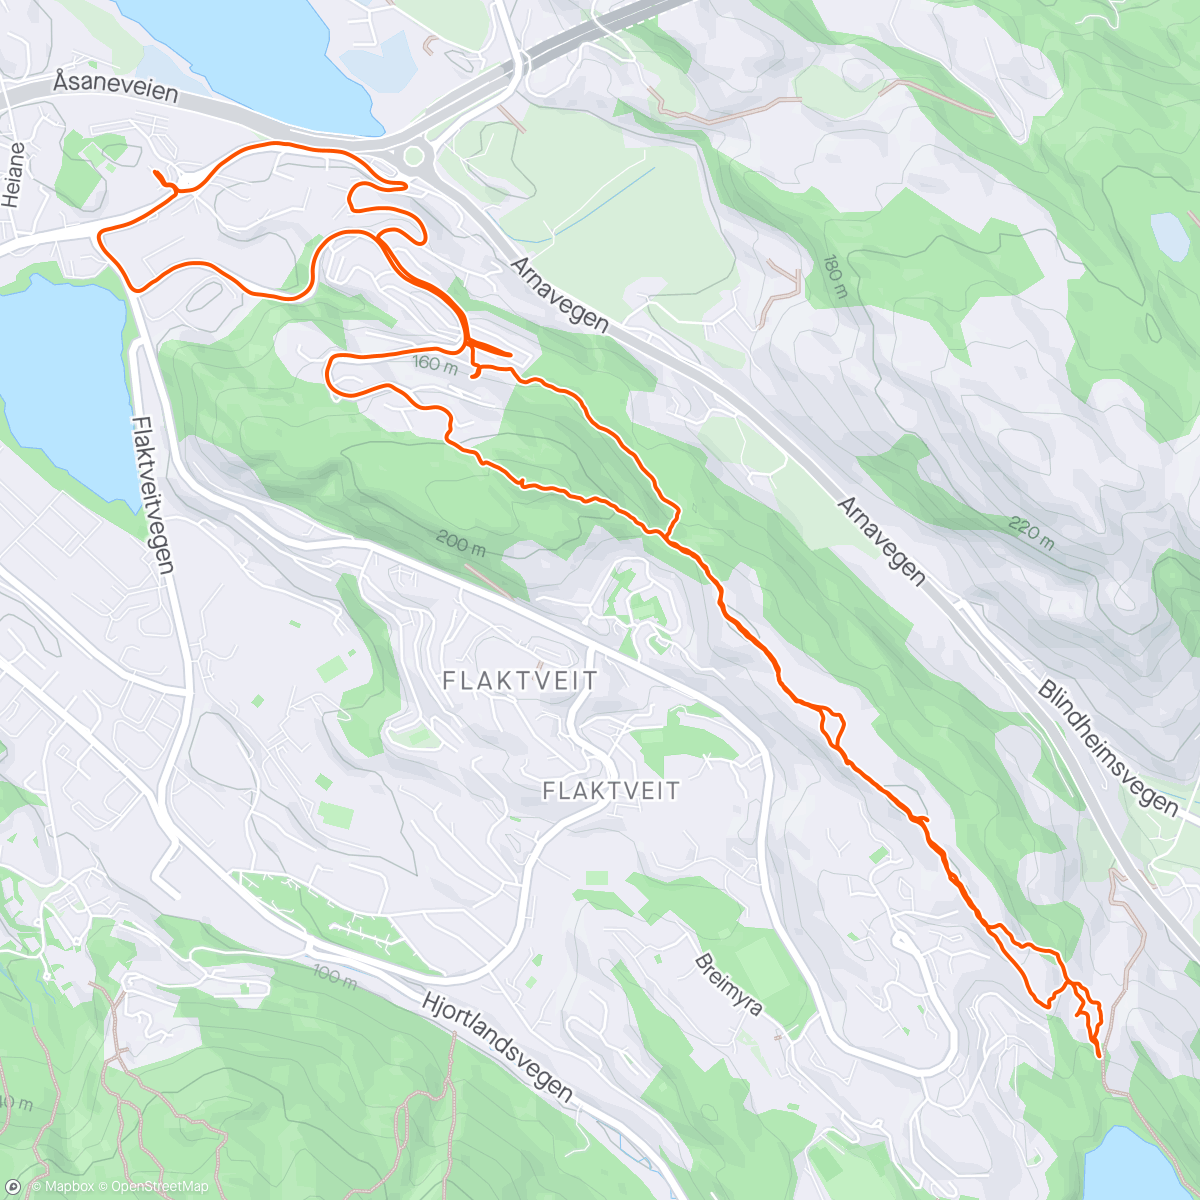 Map of the activity, Nonhøyen